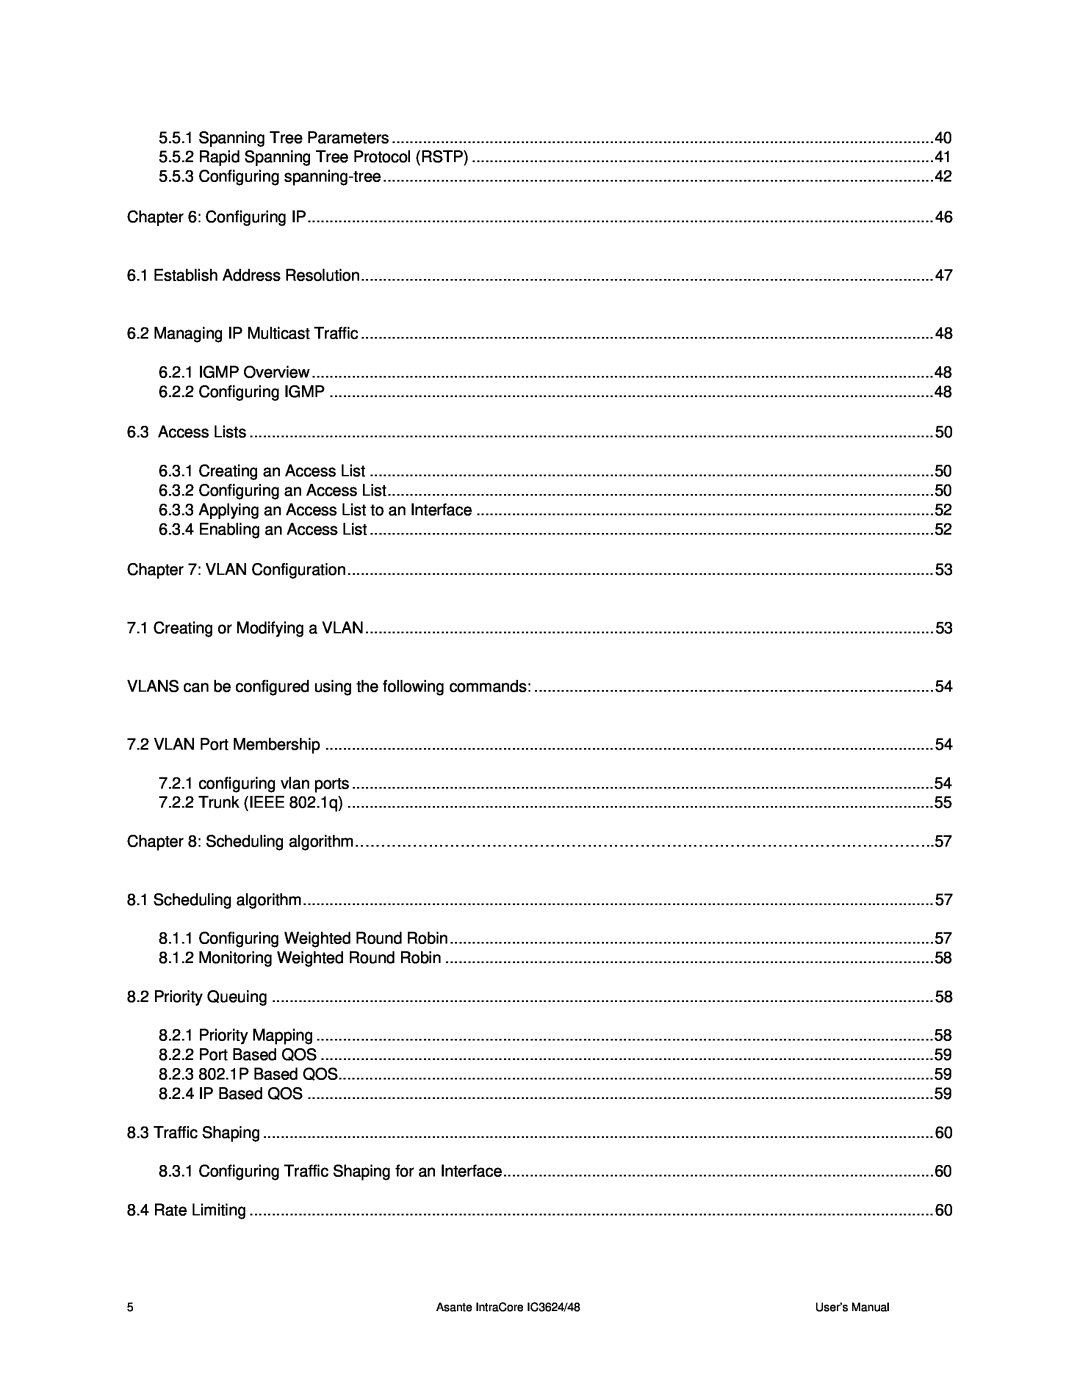 Asante Technologies 3624/48 user manual Spanning Tree Parameters 